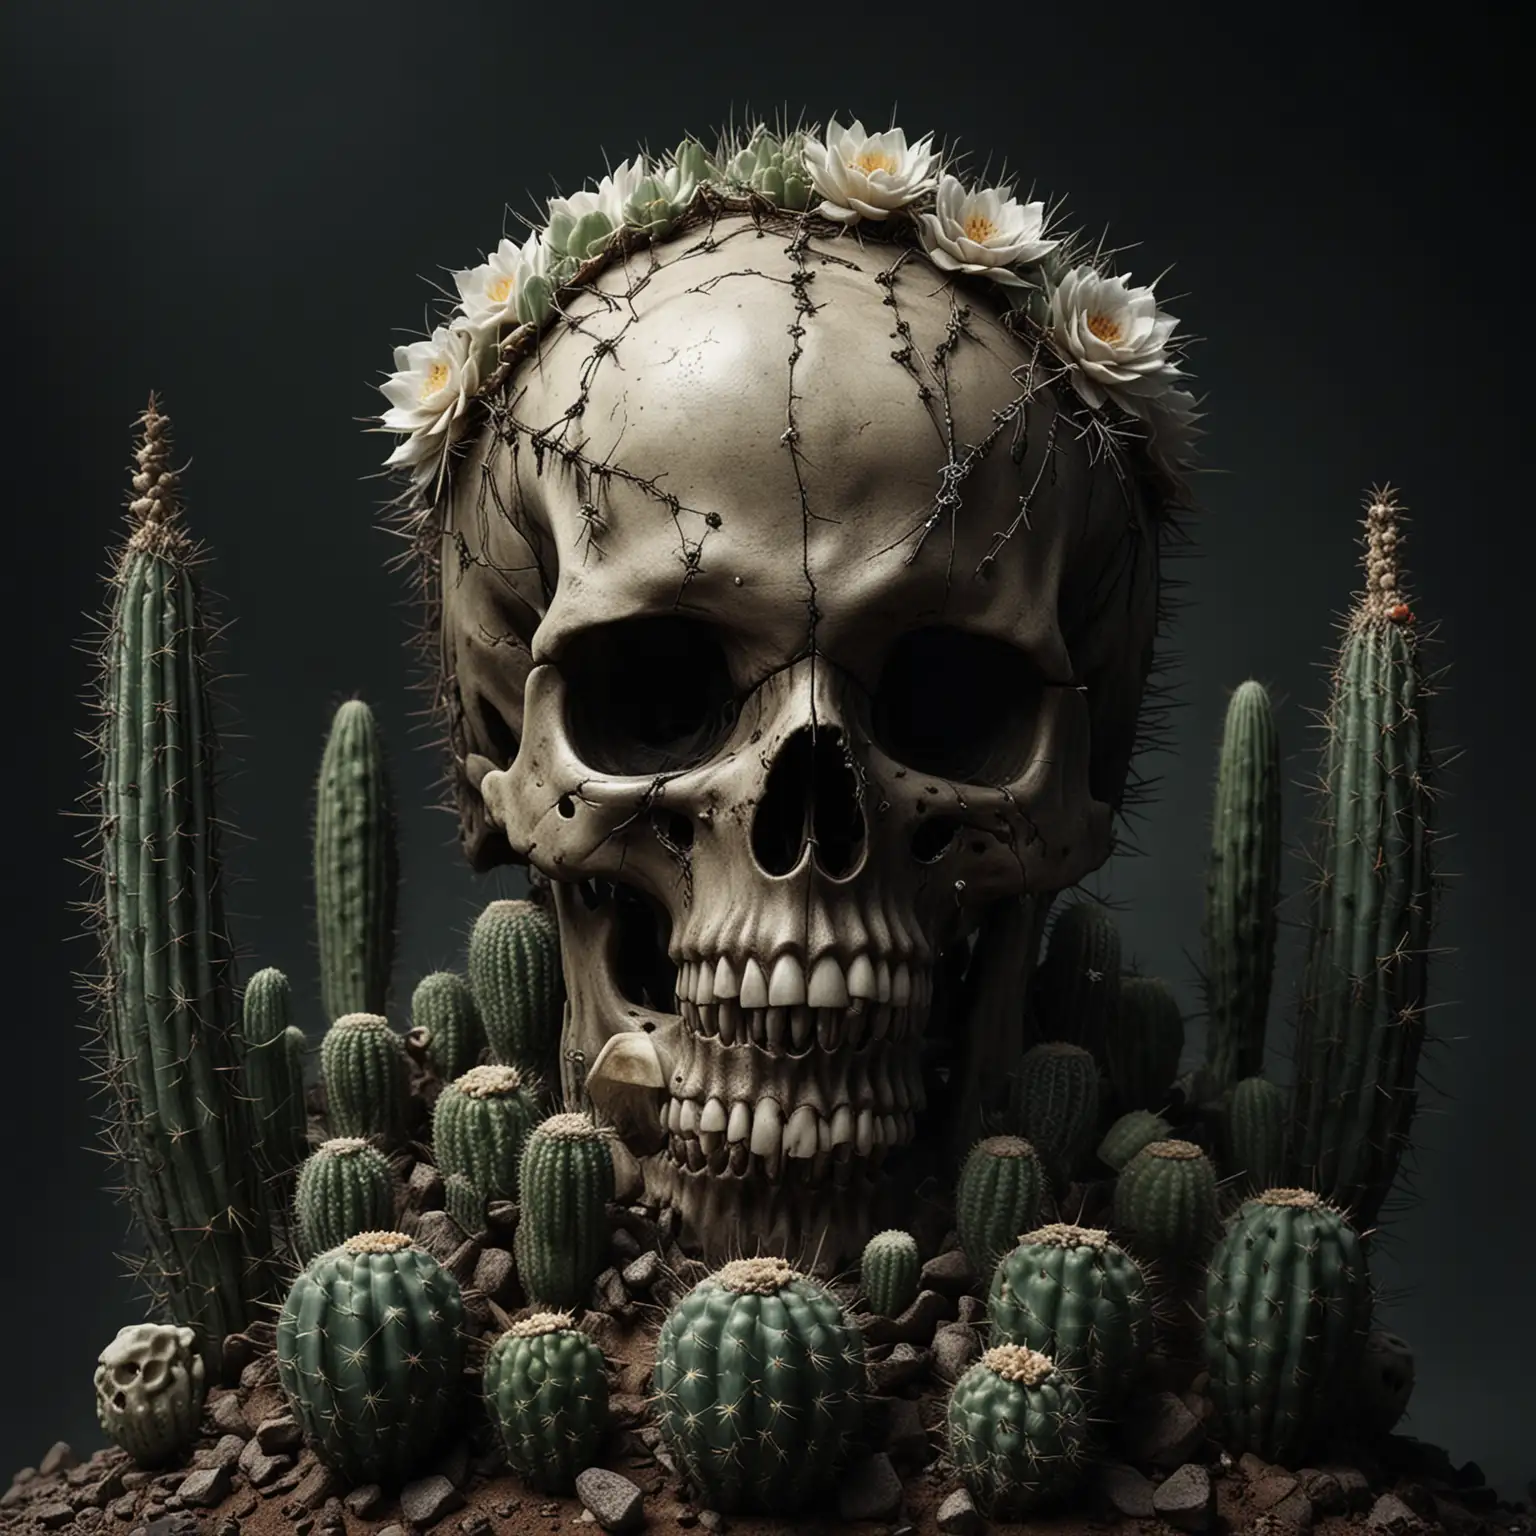 human skull, monster fangs, wild cactus growing from it, dark colors